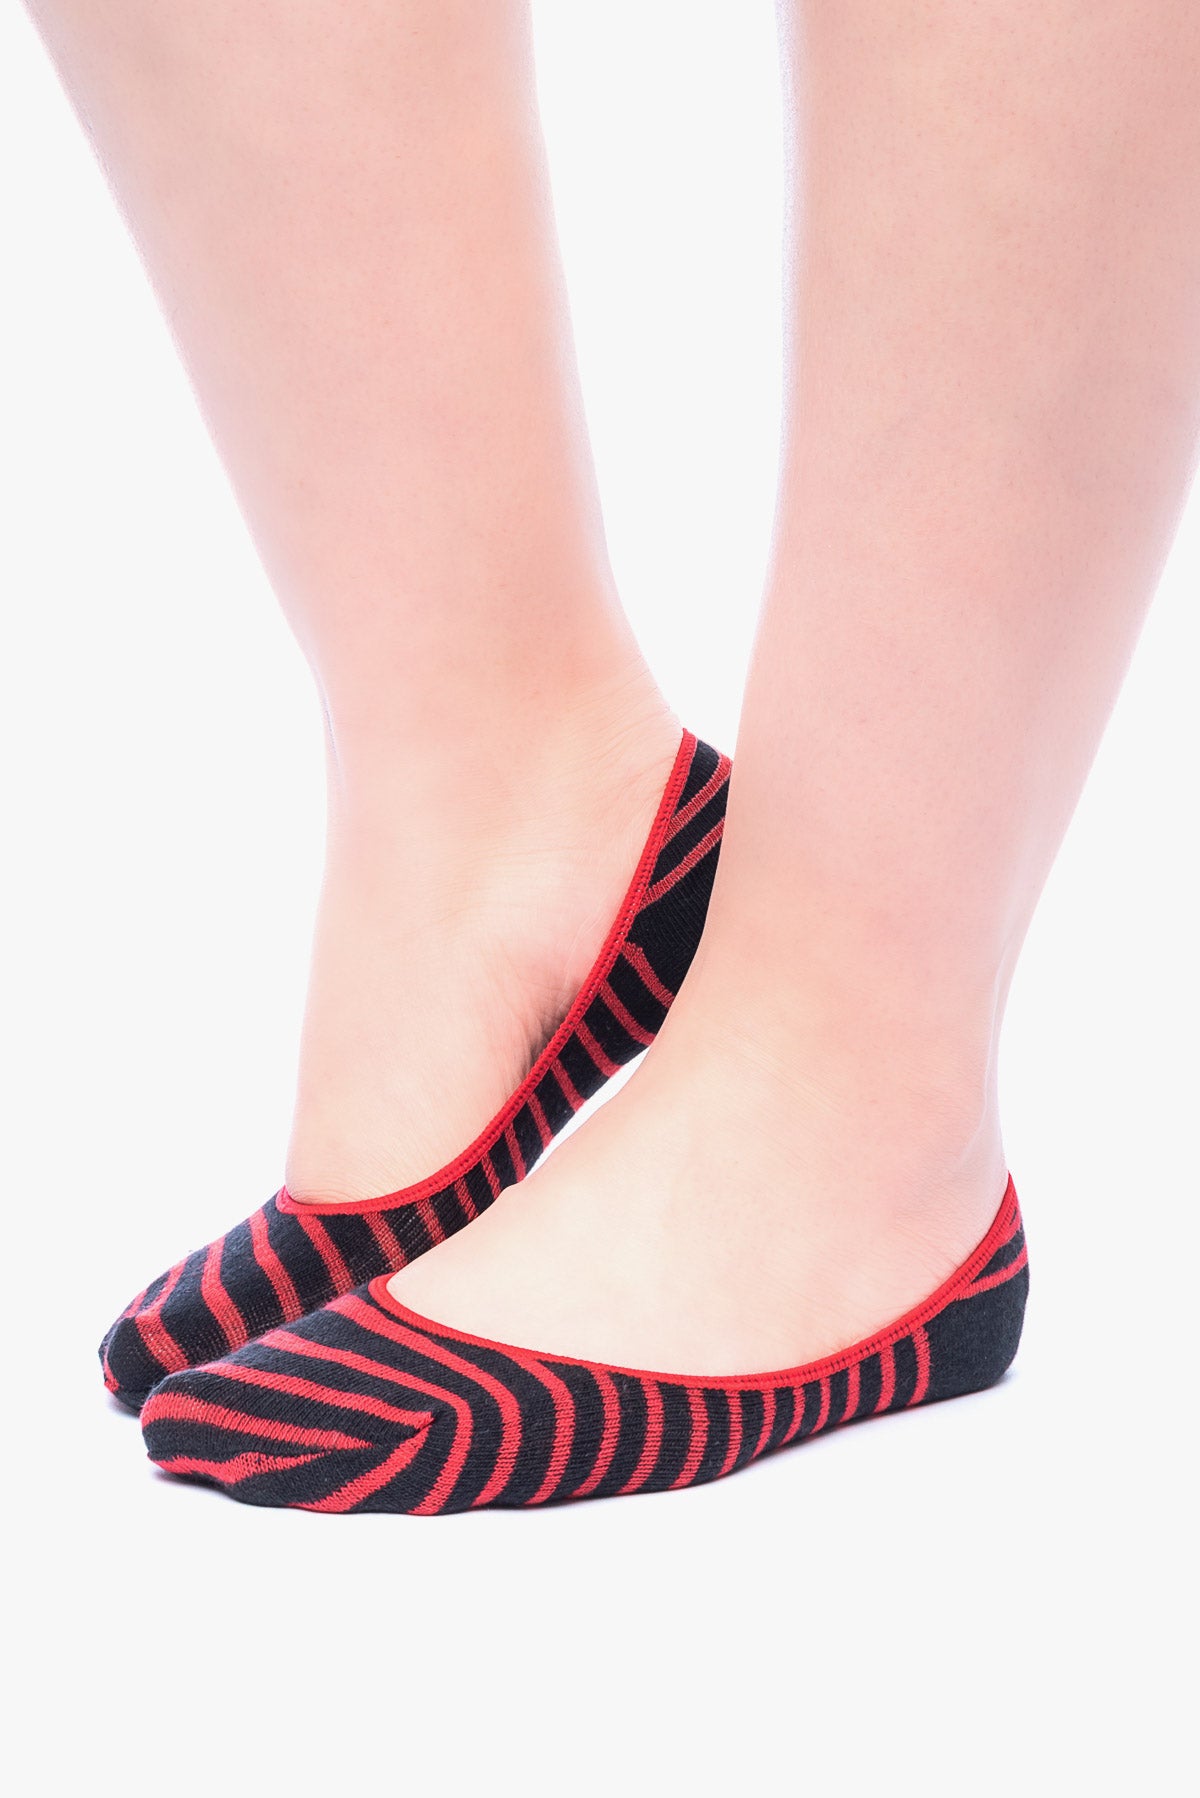 WILLOW 3 red liner-socks